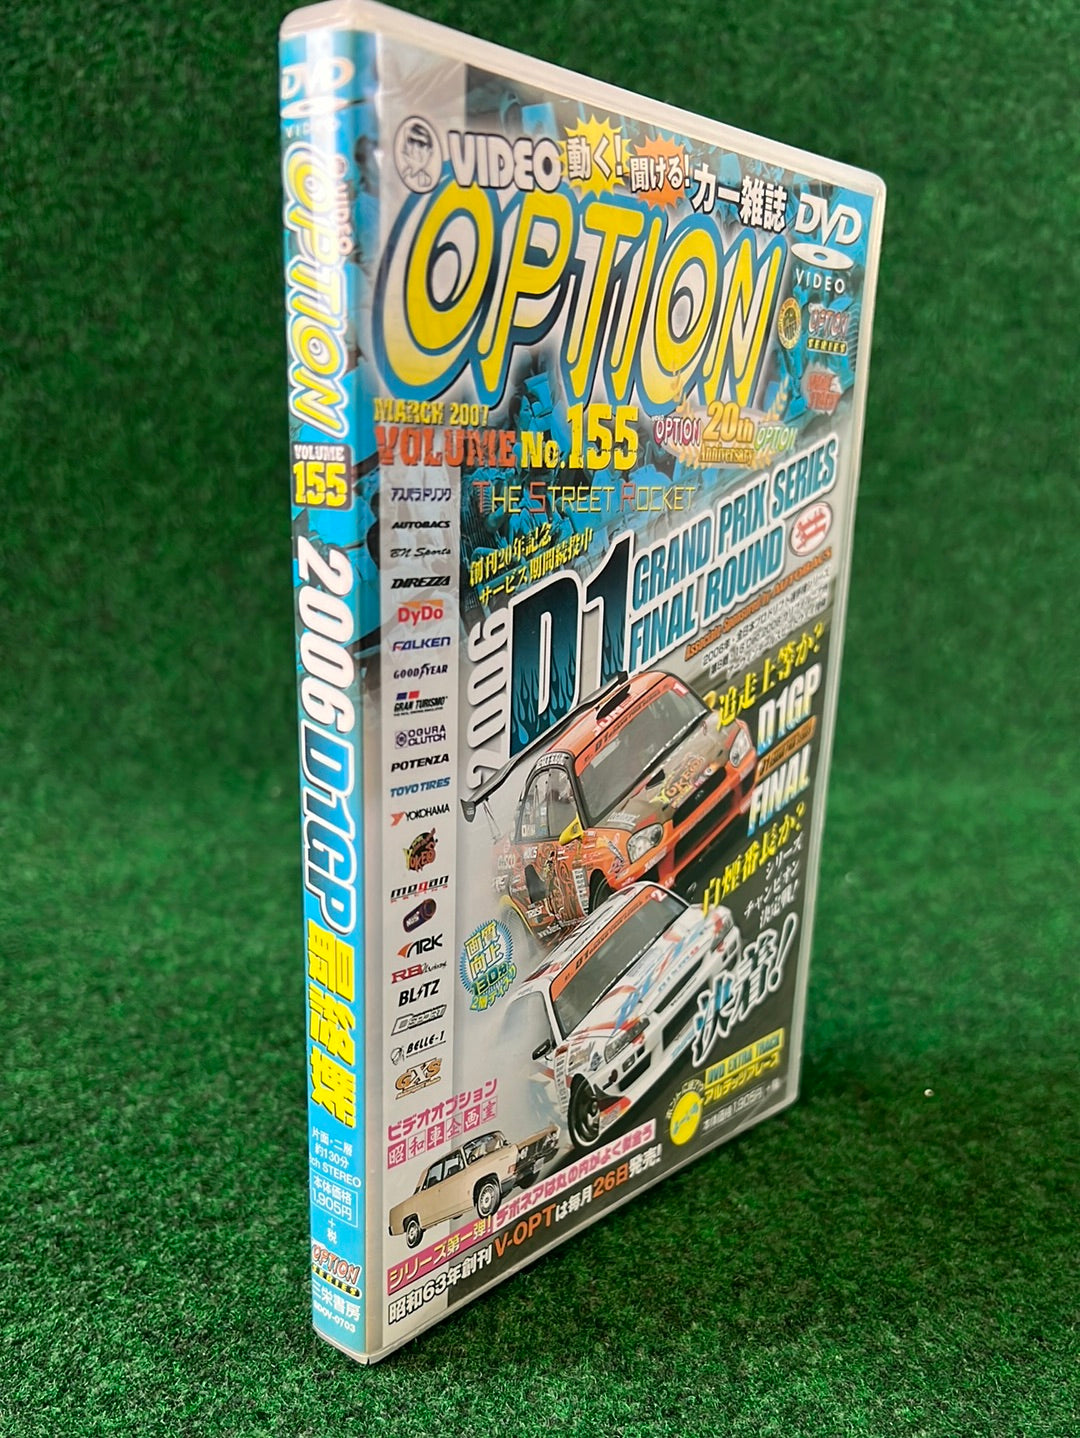 Option Video DVD - March 2007 Vol. 155